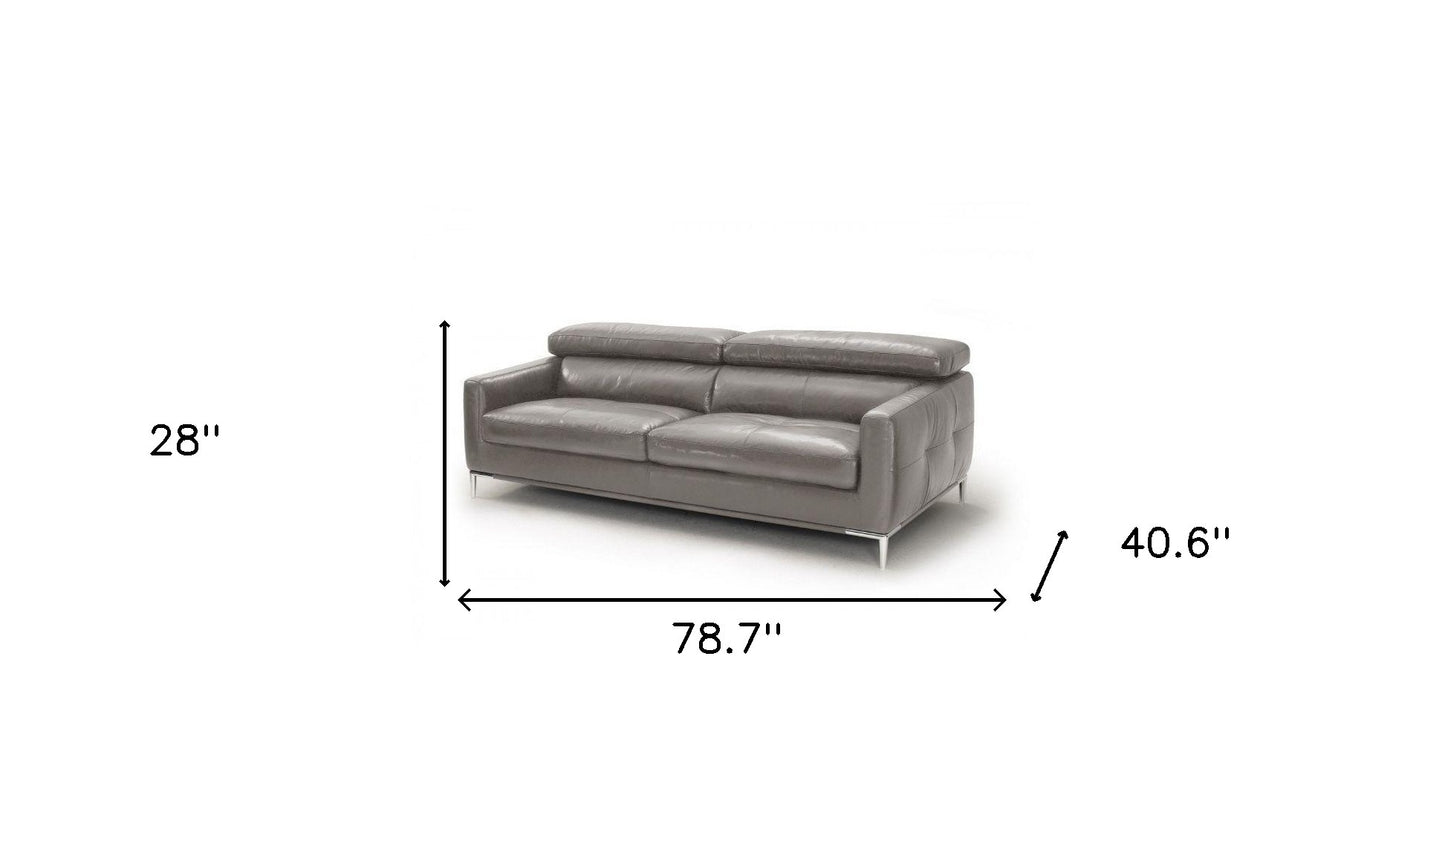 79" Dark Grey Leather Sofa With Silver Legs